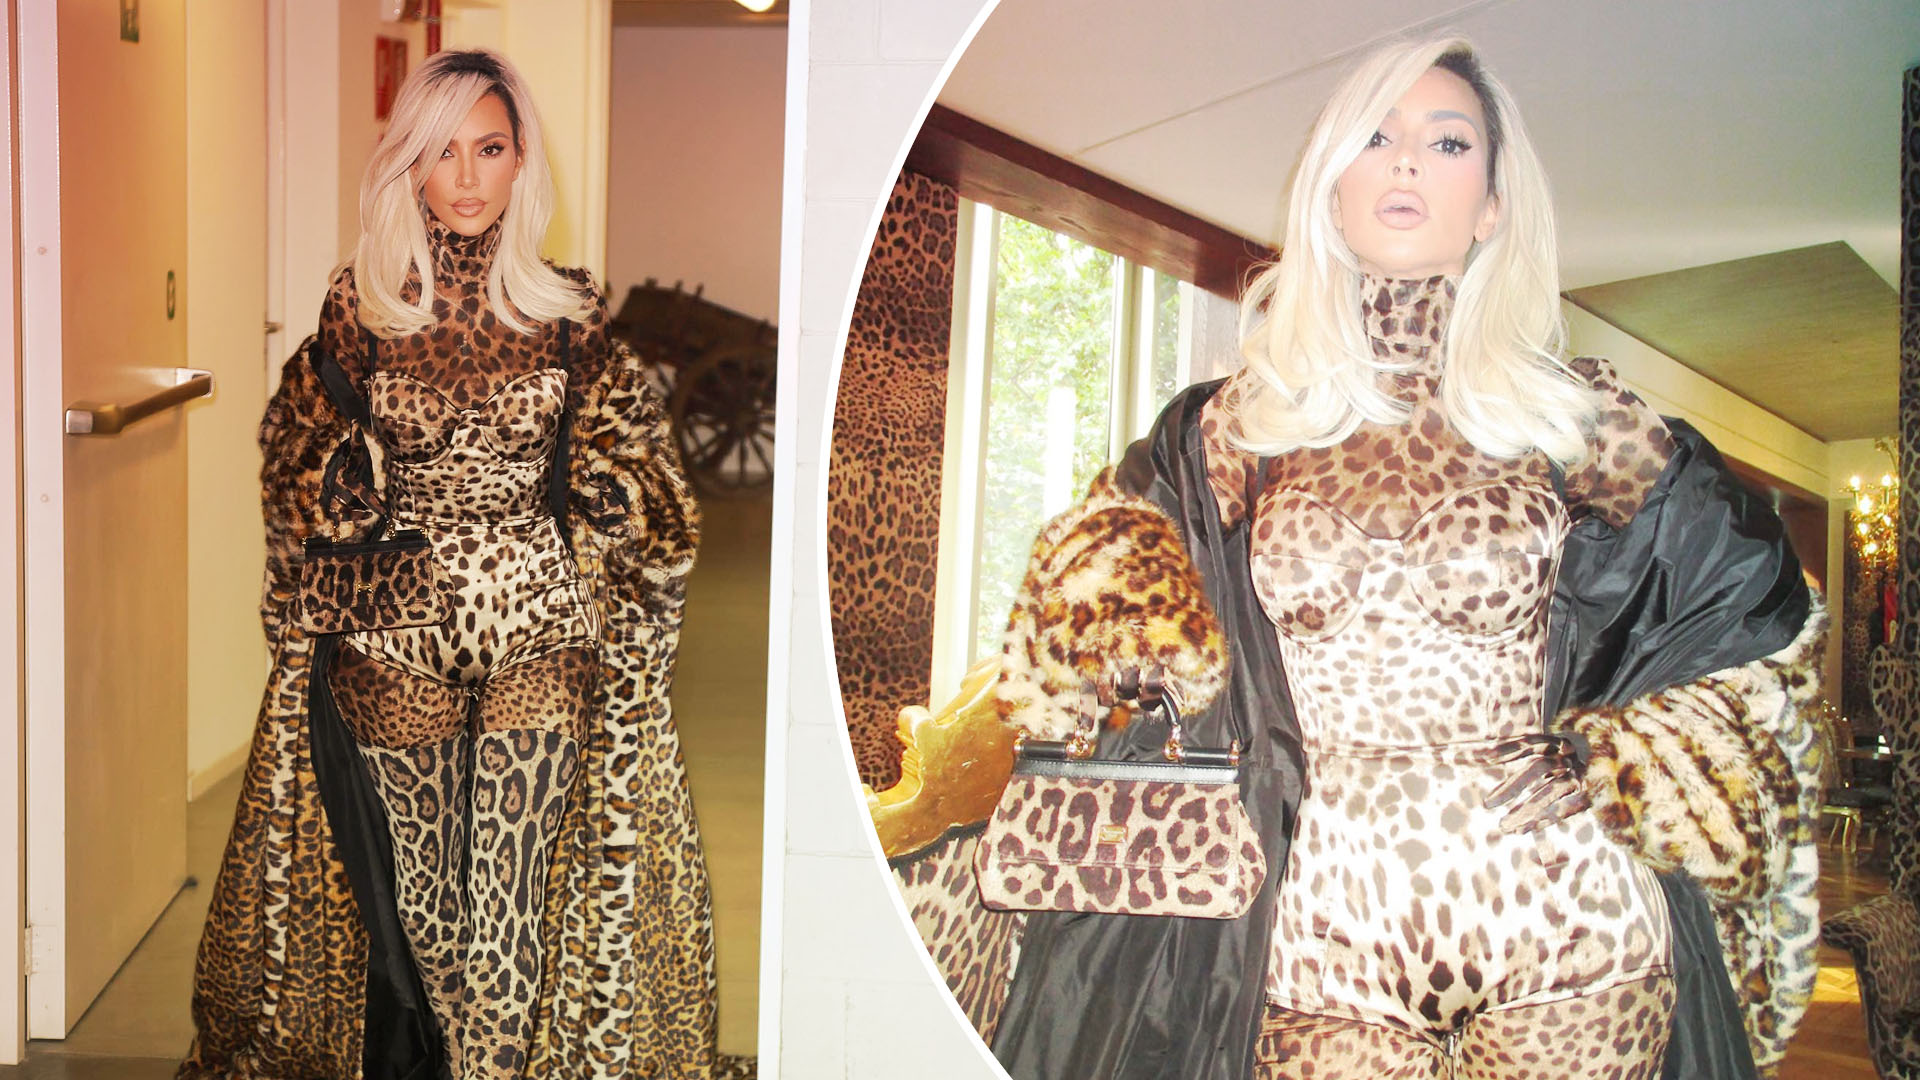 Kim Kardashian mentions herself as Cheetah Girl